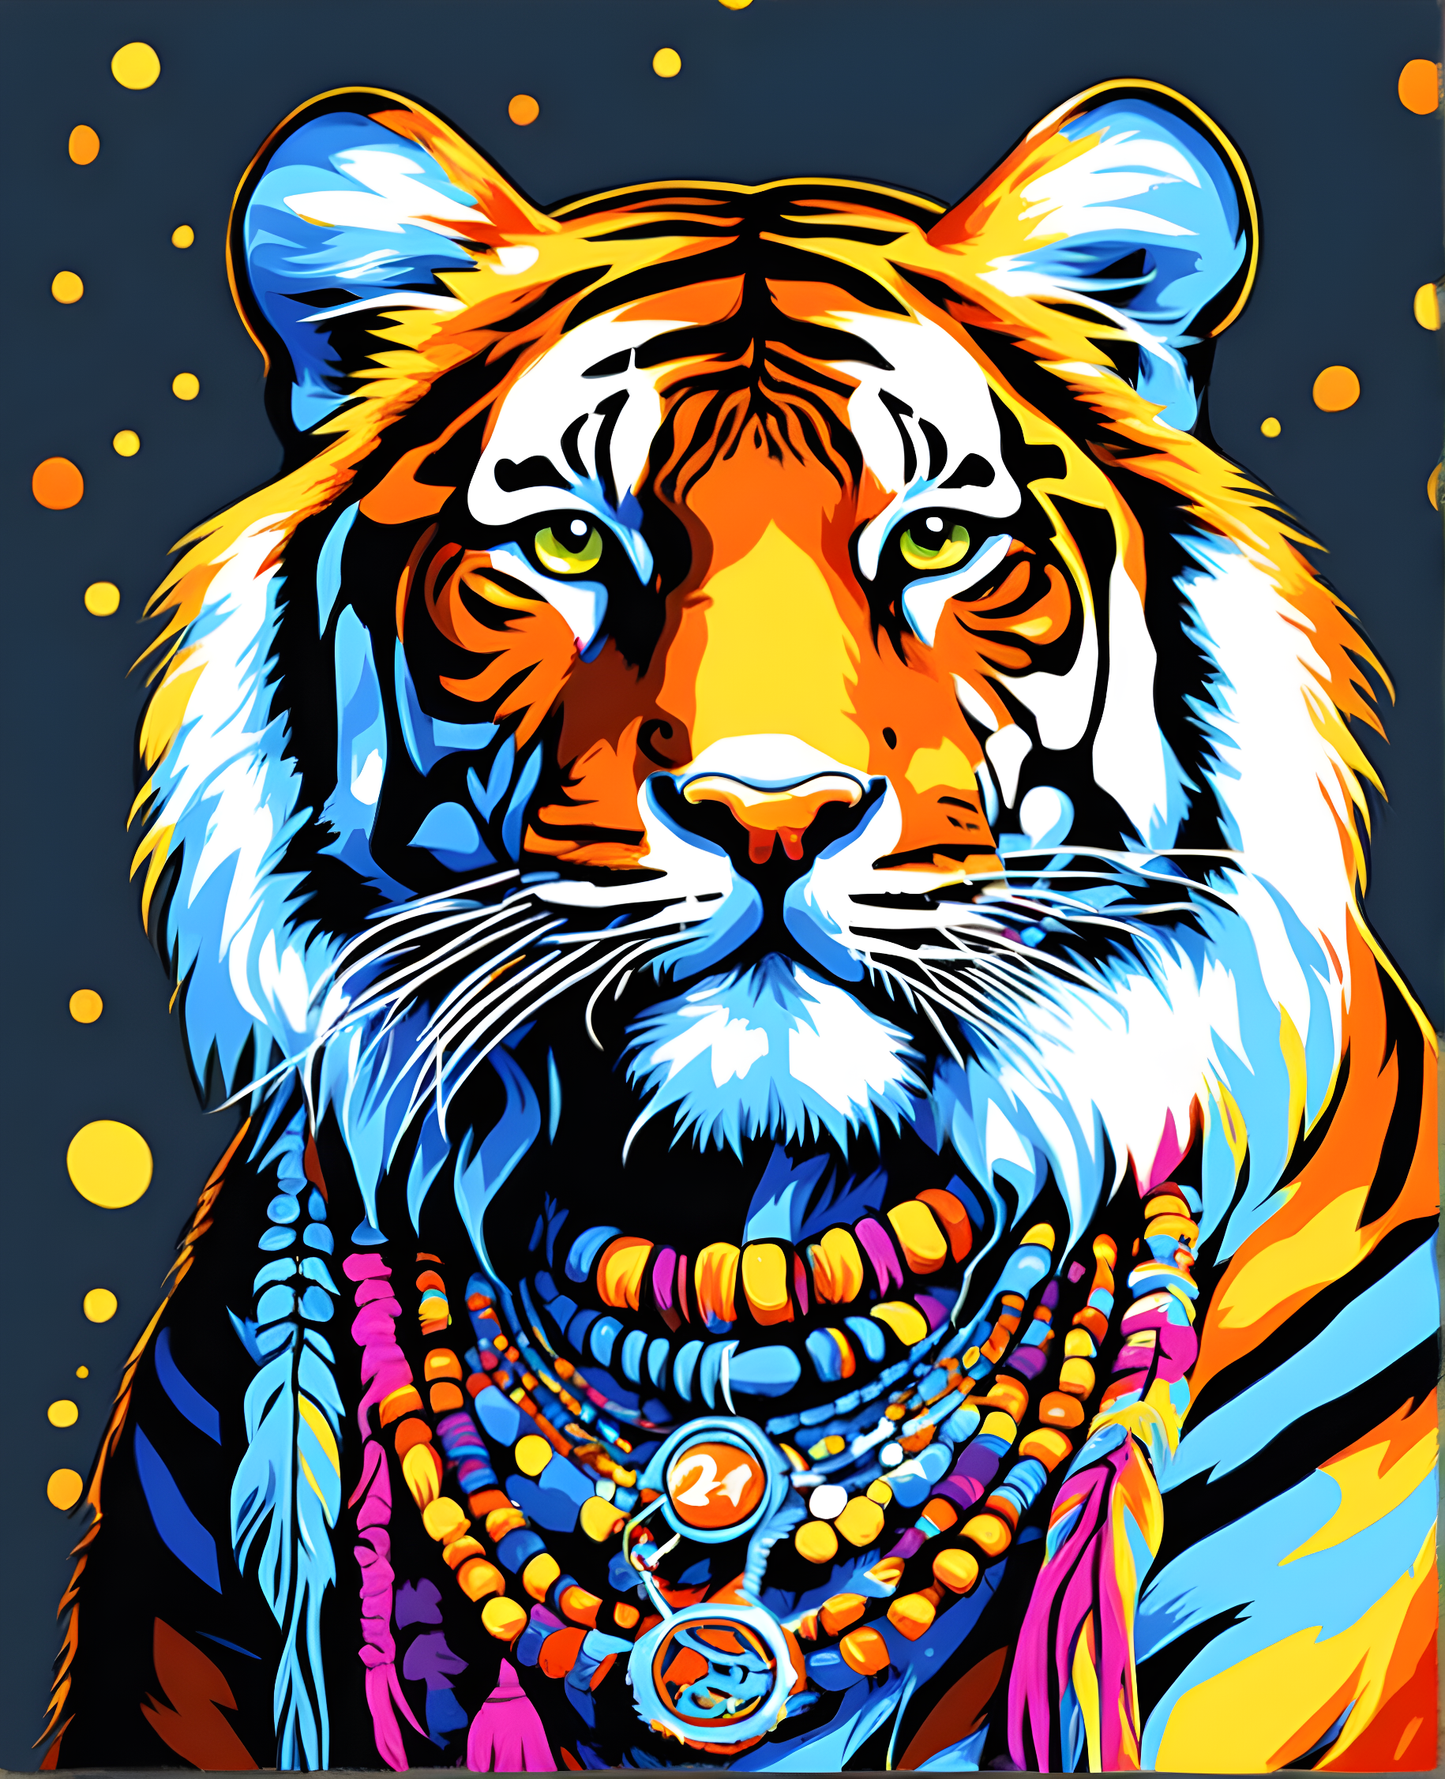 Hippie Tiger - Van-Go Paint-By-Number Kit